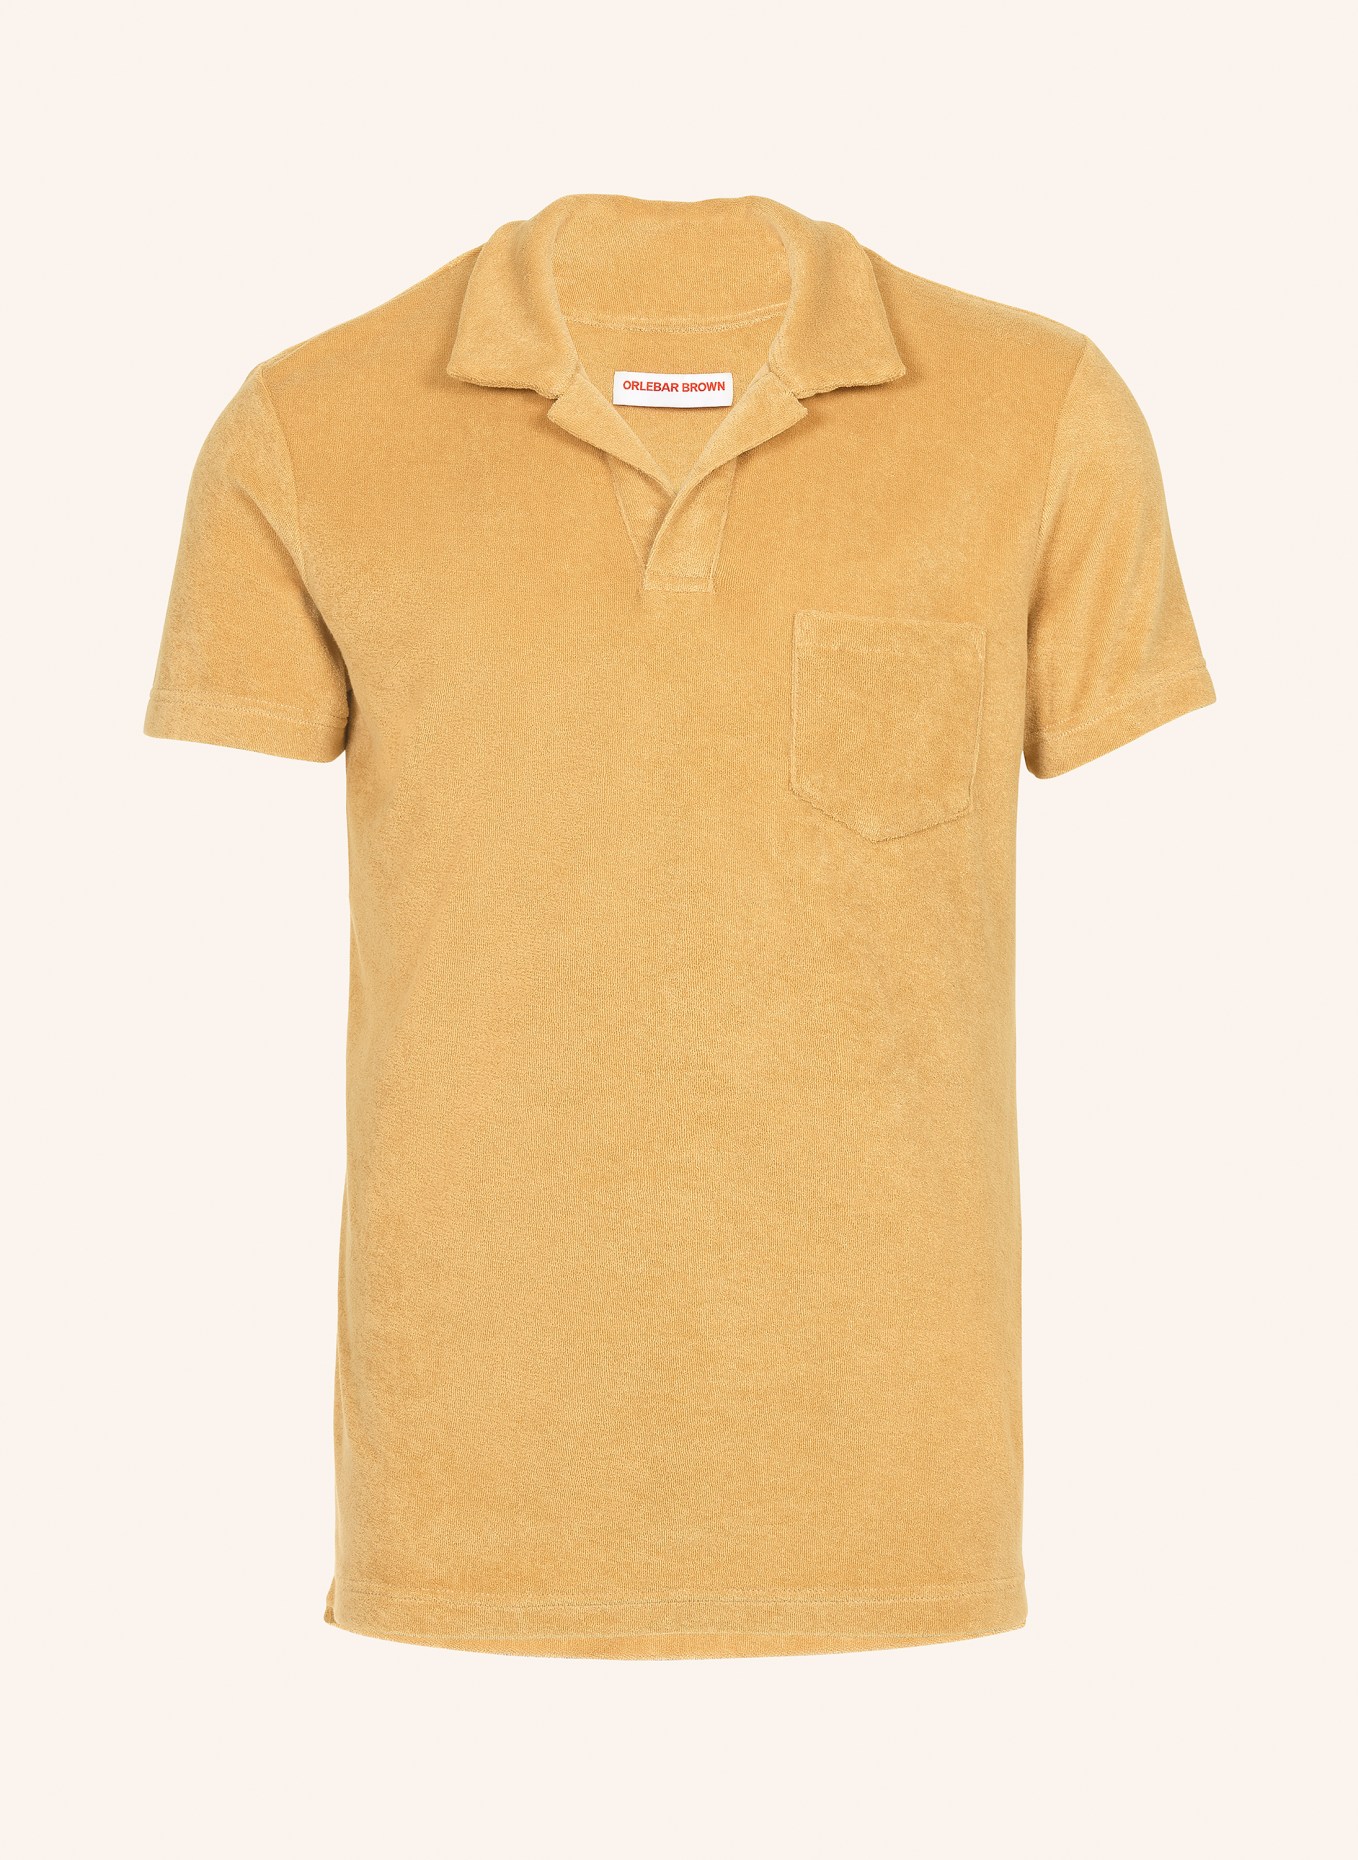 ORLEBAR BROWN Poloshirt TERRY, Farbe: CAMEL (Bild 1)